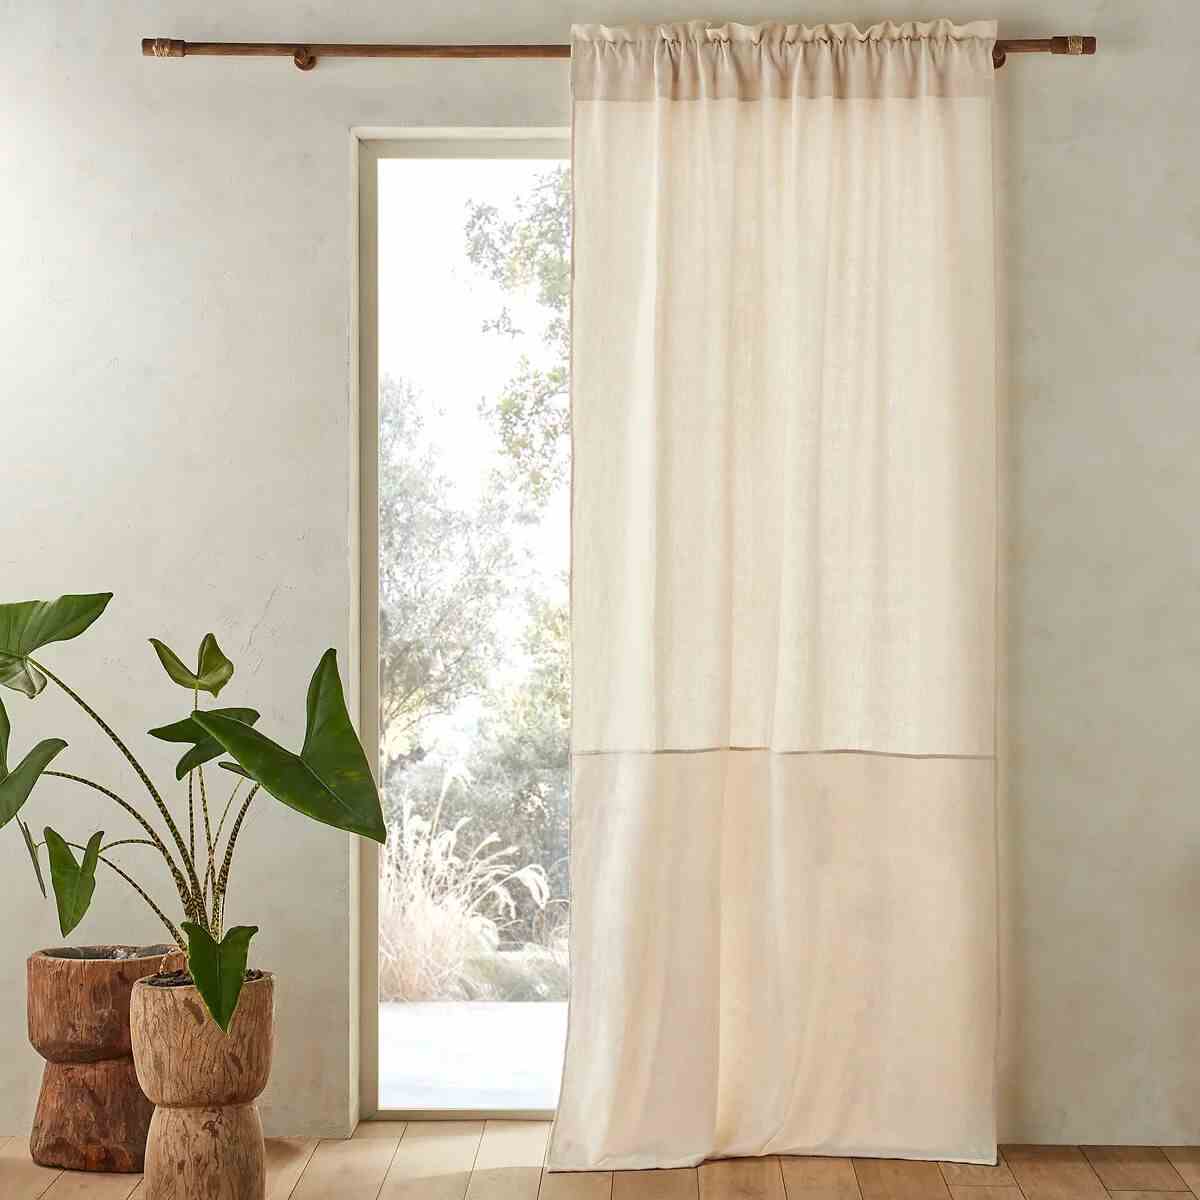 A Bi-Material Linen And Velvet Curtain To Enhance Industrial Decor